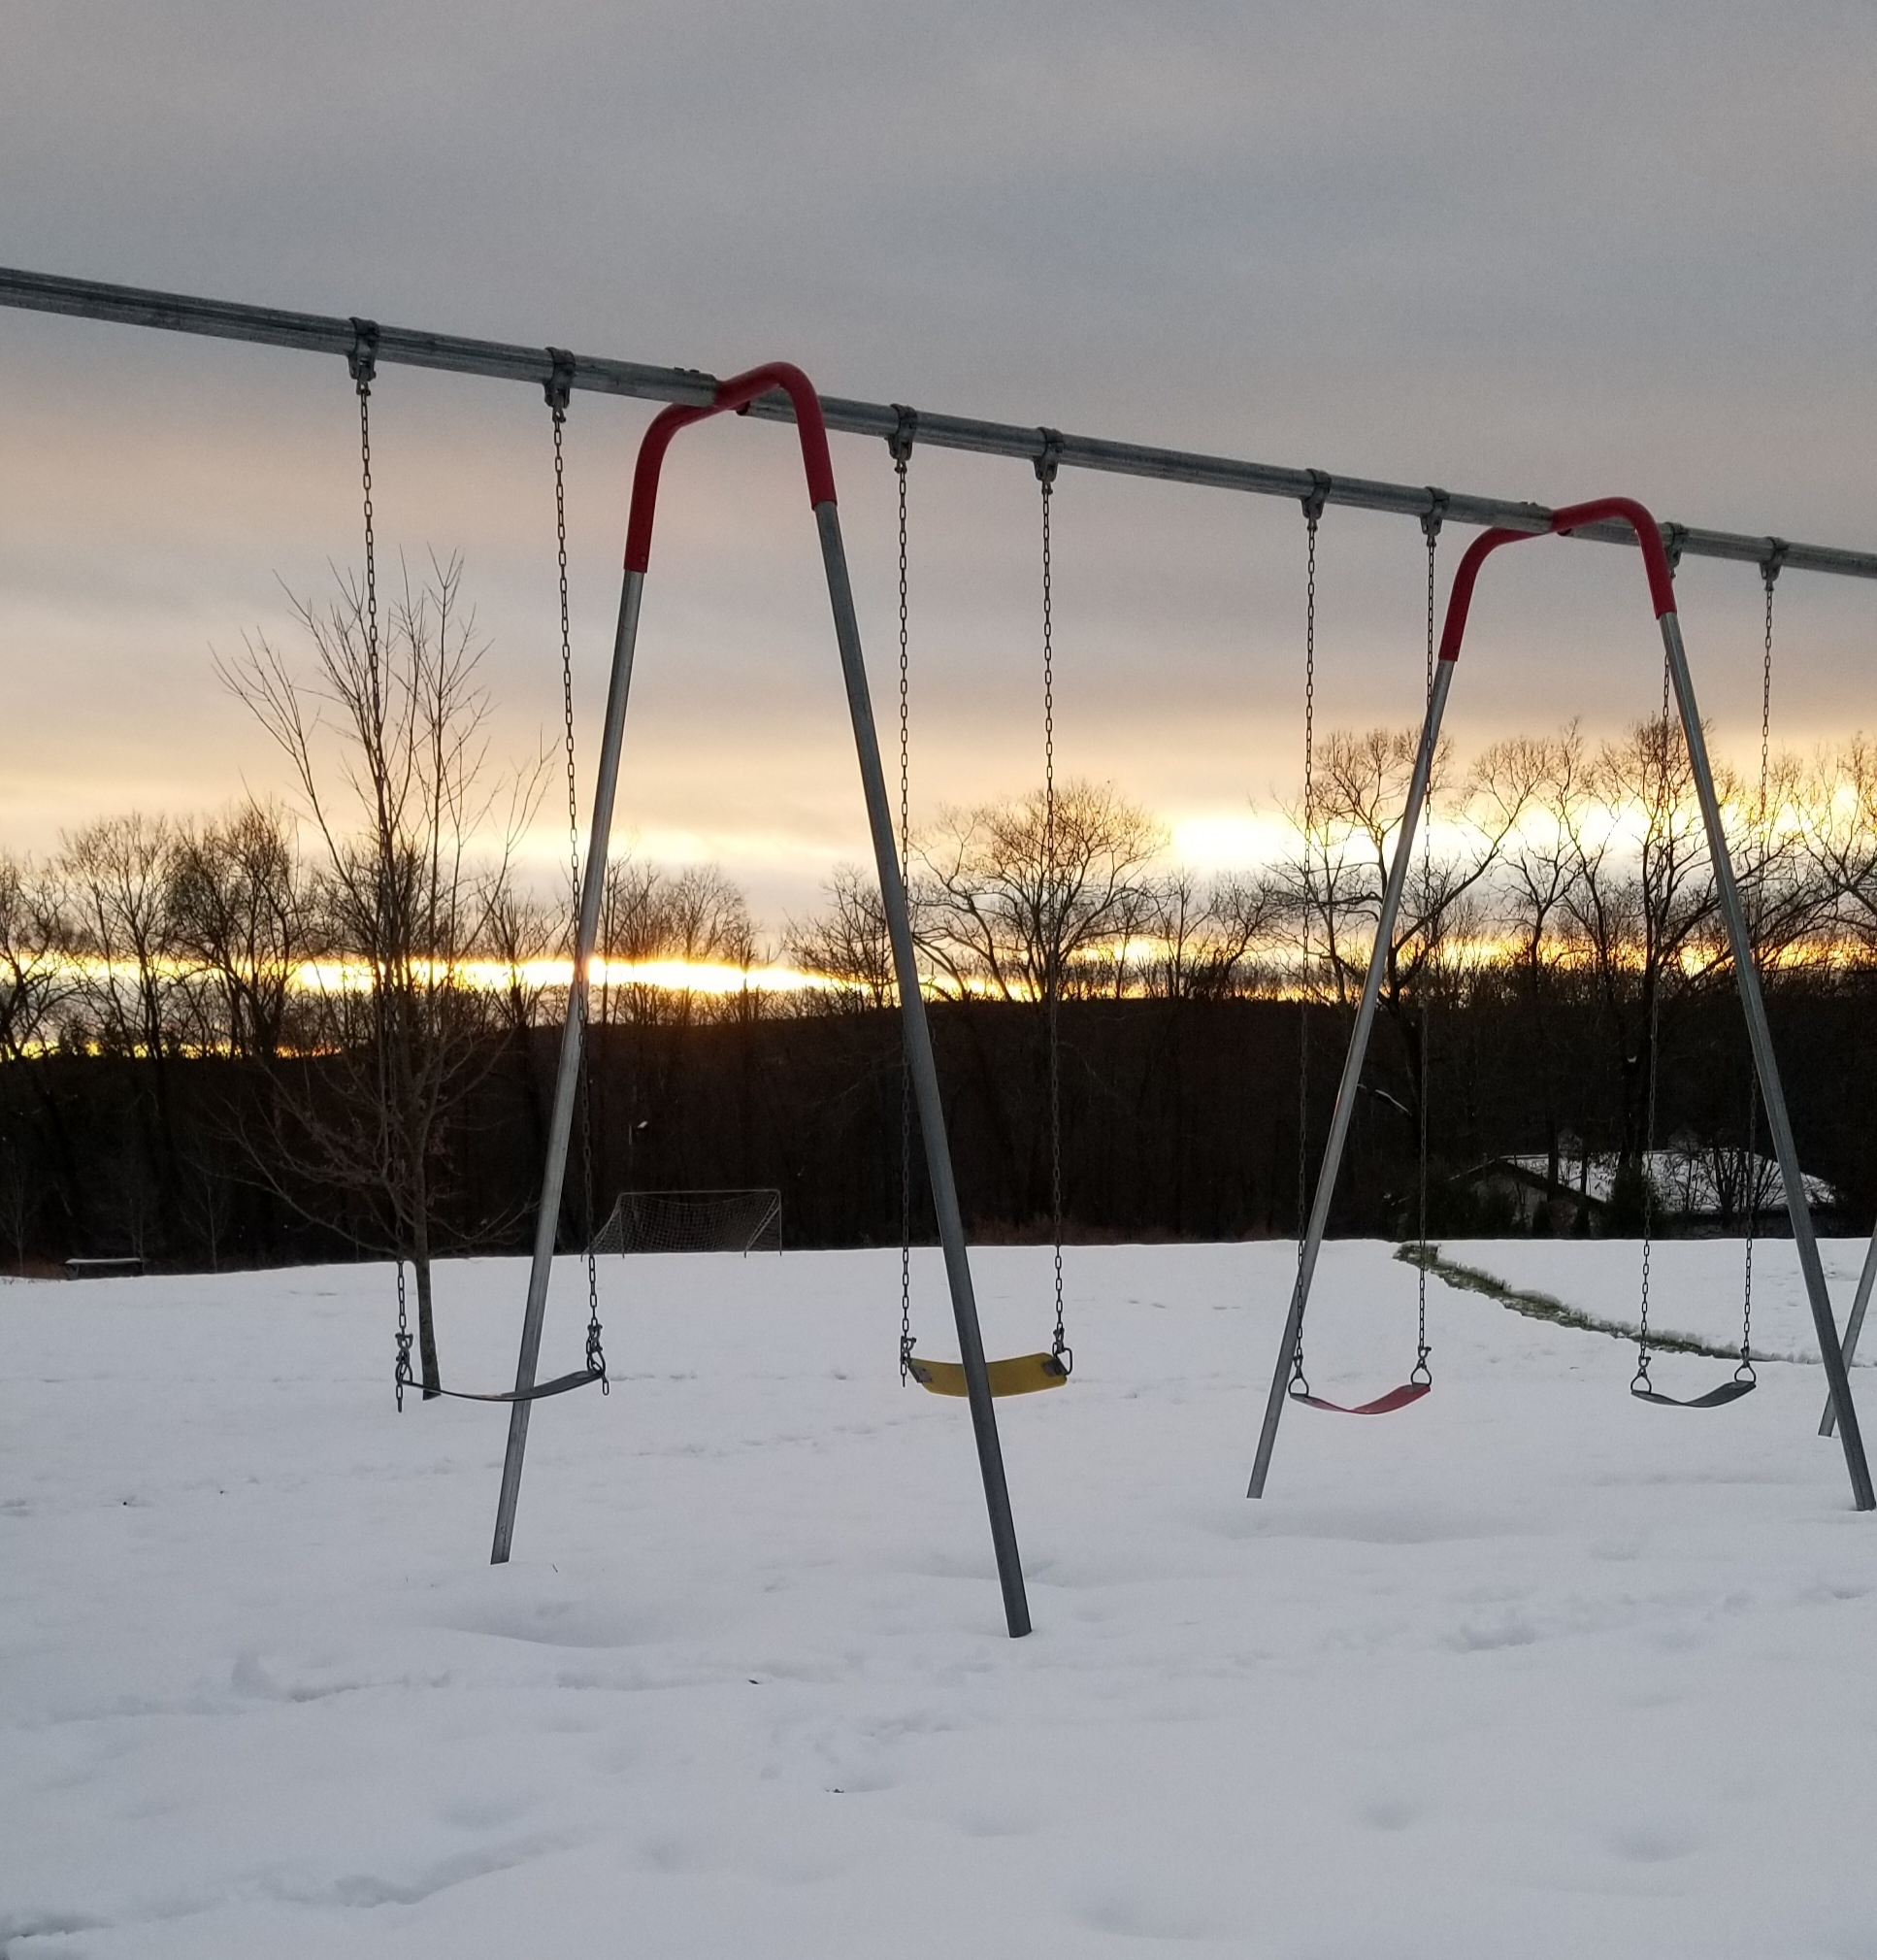 Snowy Playground at Sunset